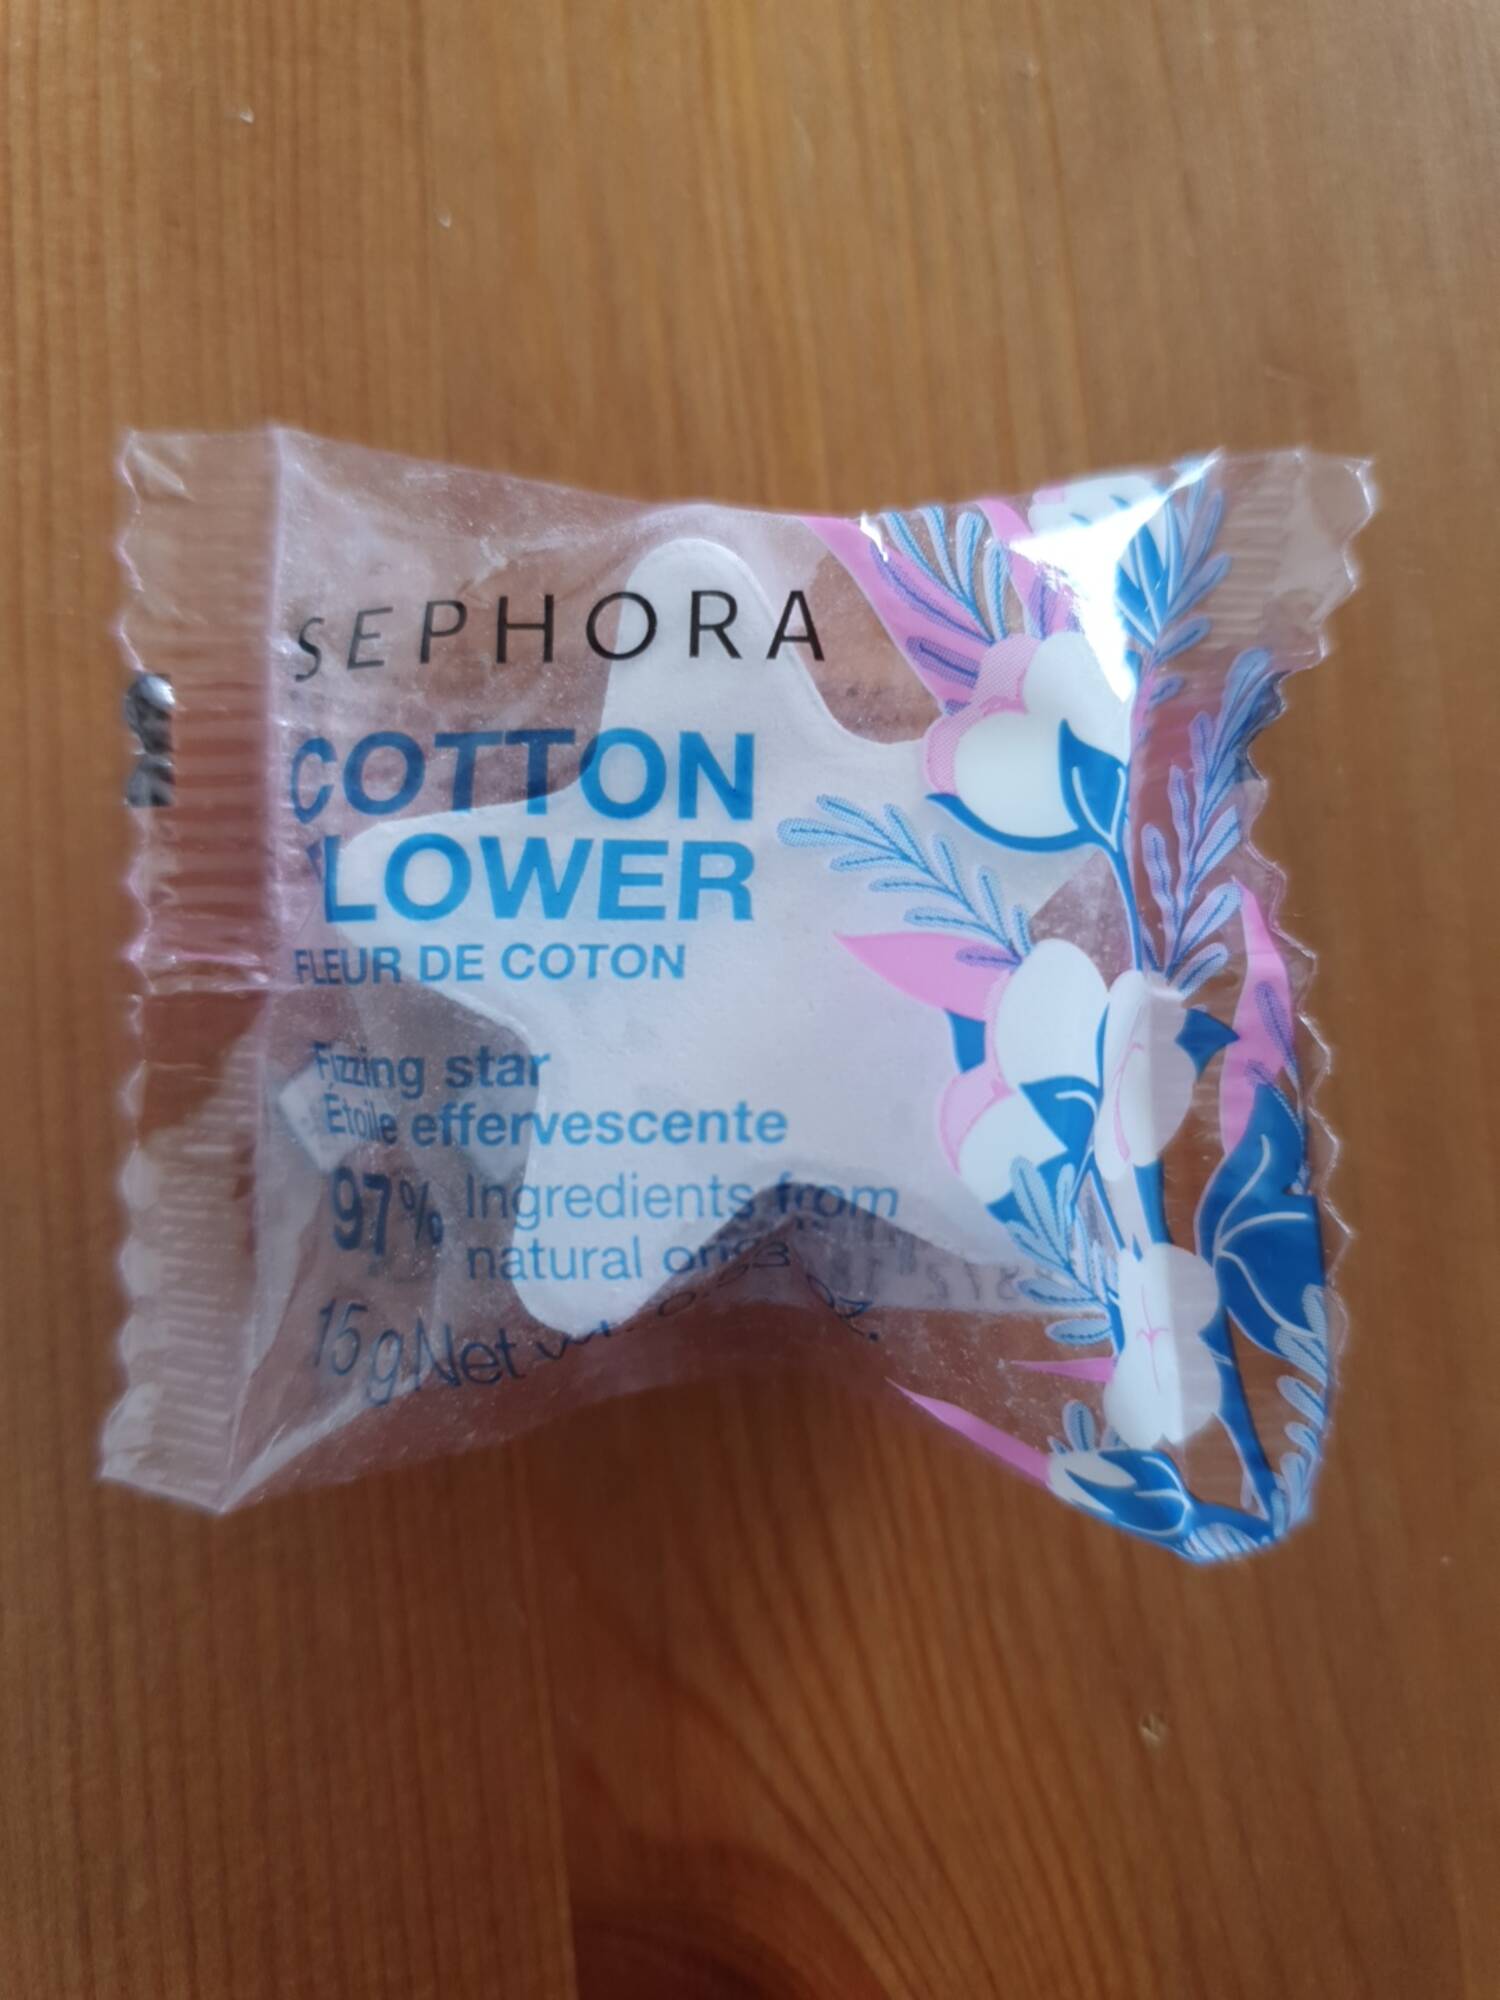 SEPHORA - Fleur de coton - Etoile effervescente